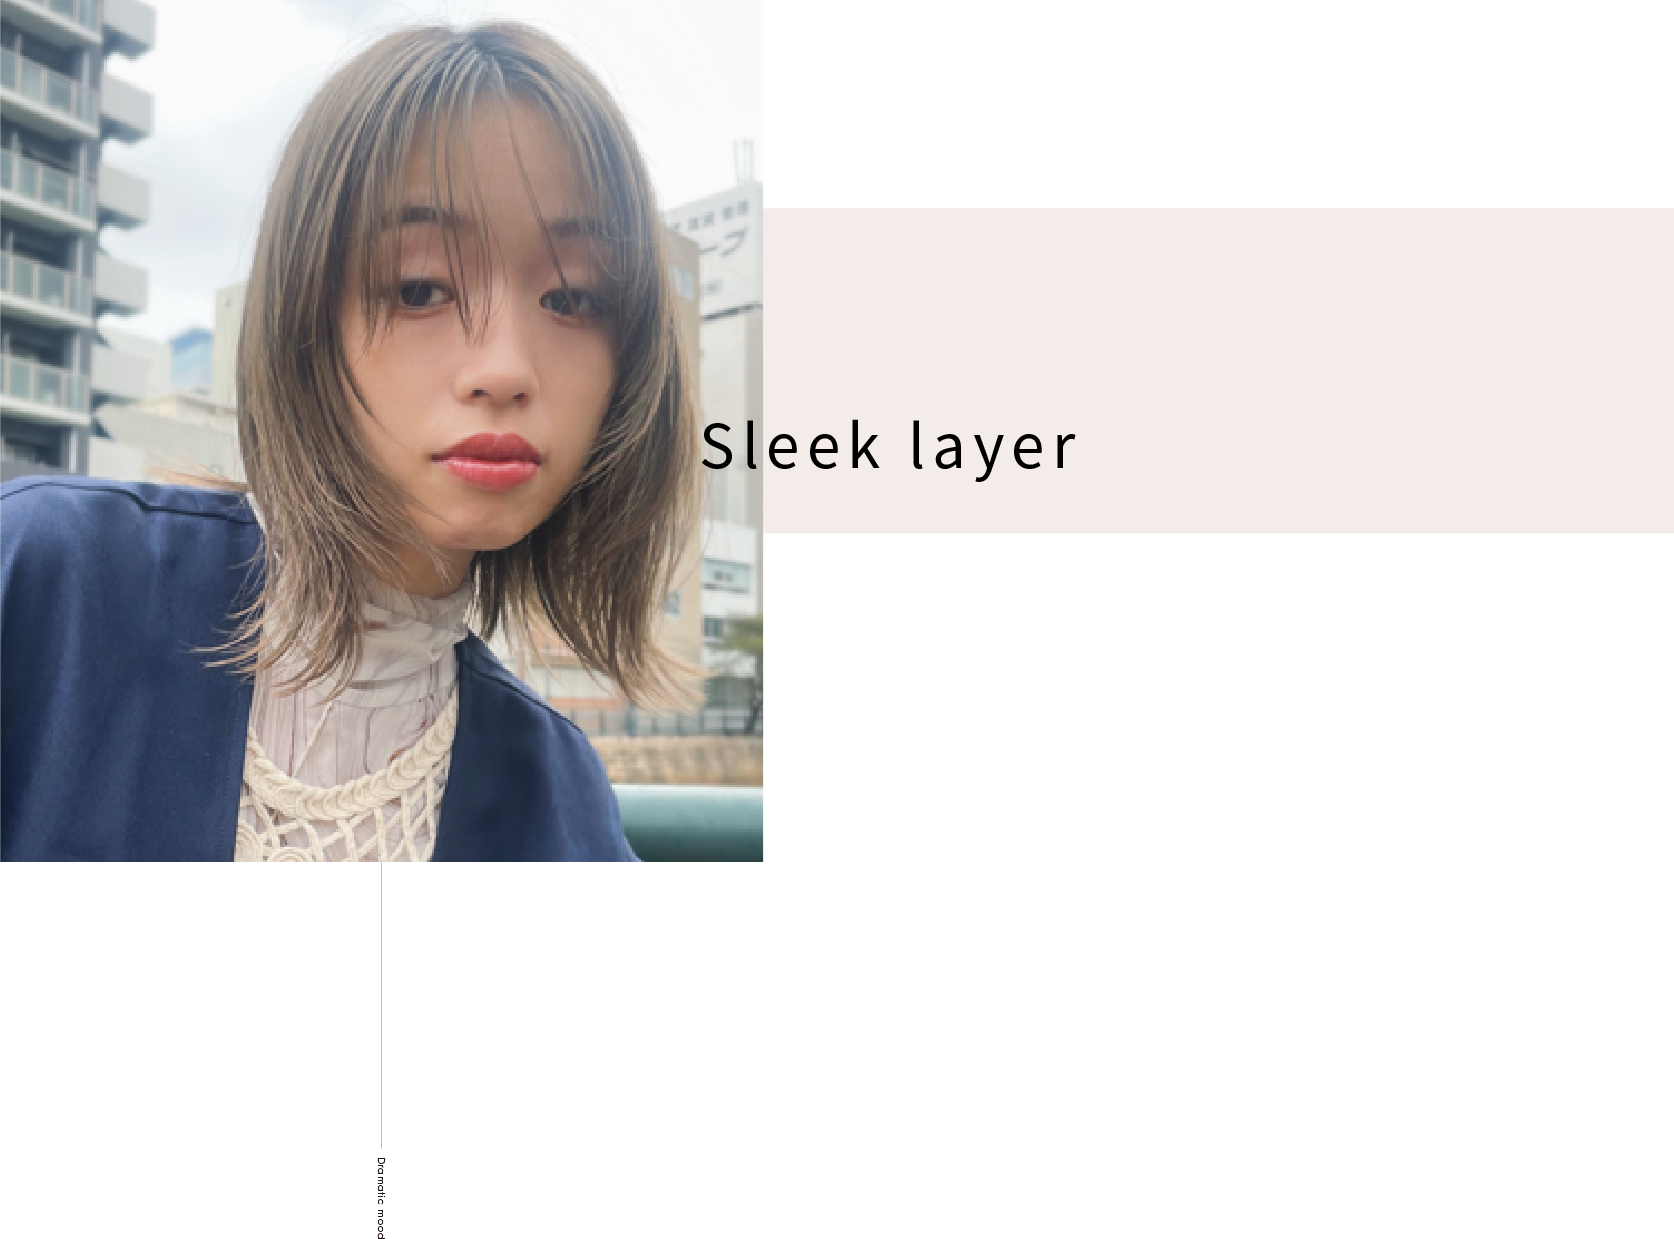 Sleek layer